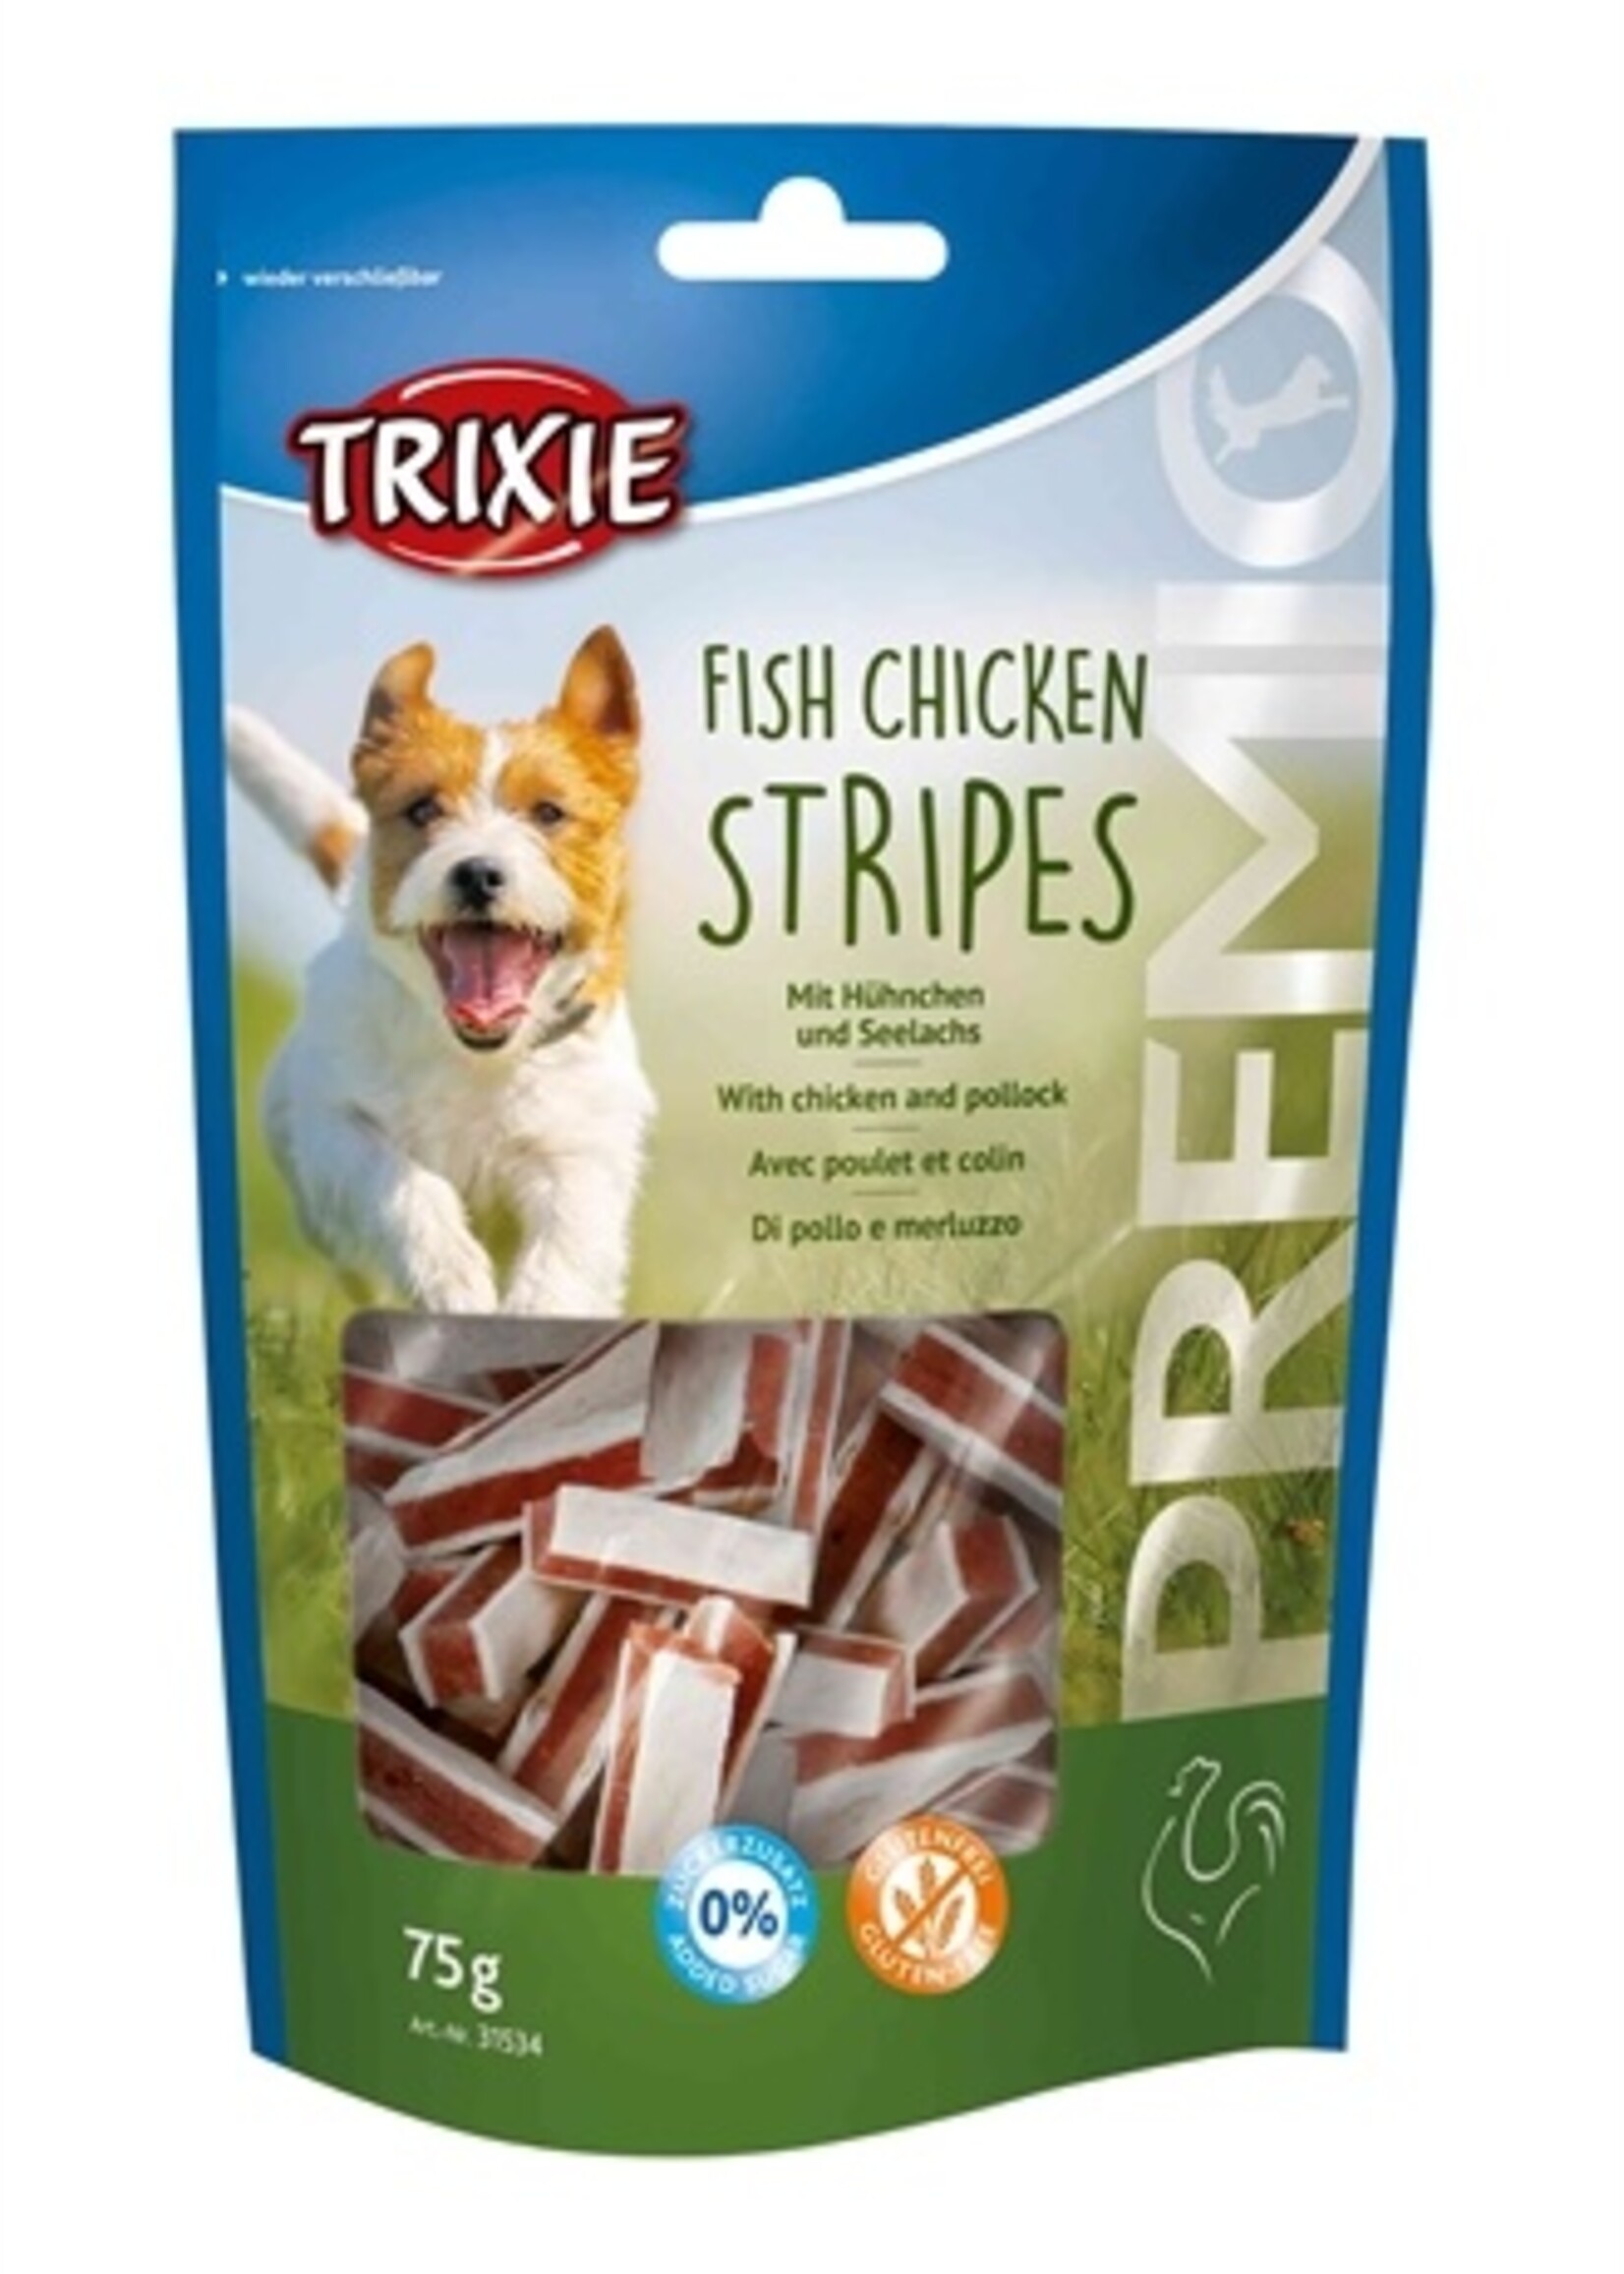 Trixie Trixie premio fish chicken stripes